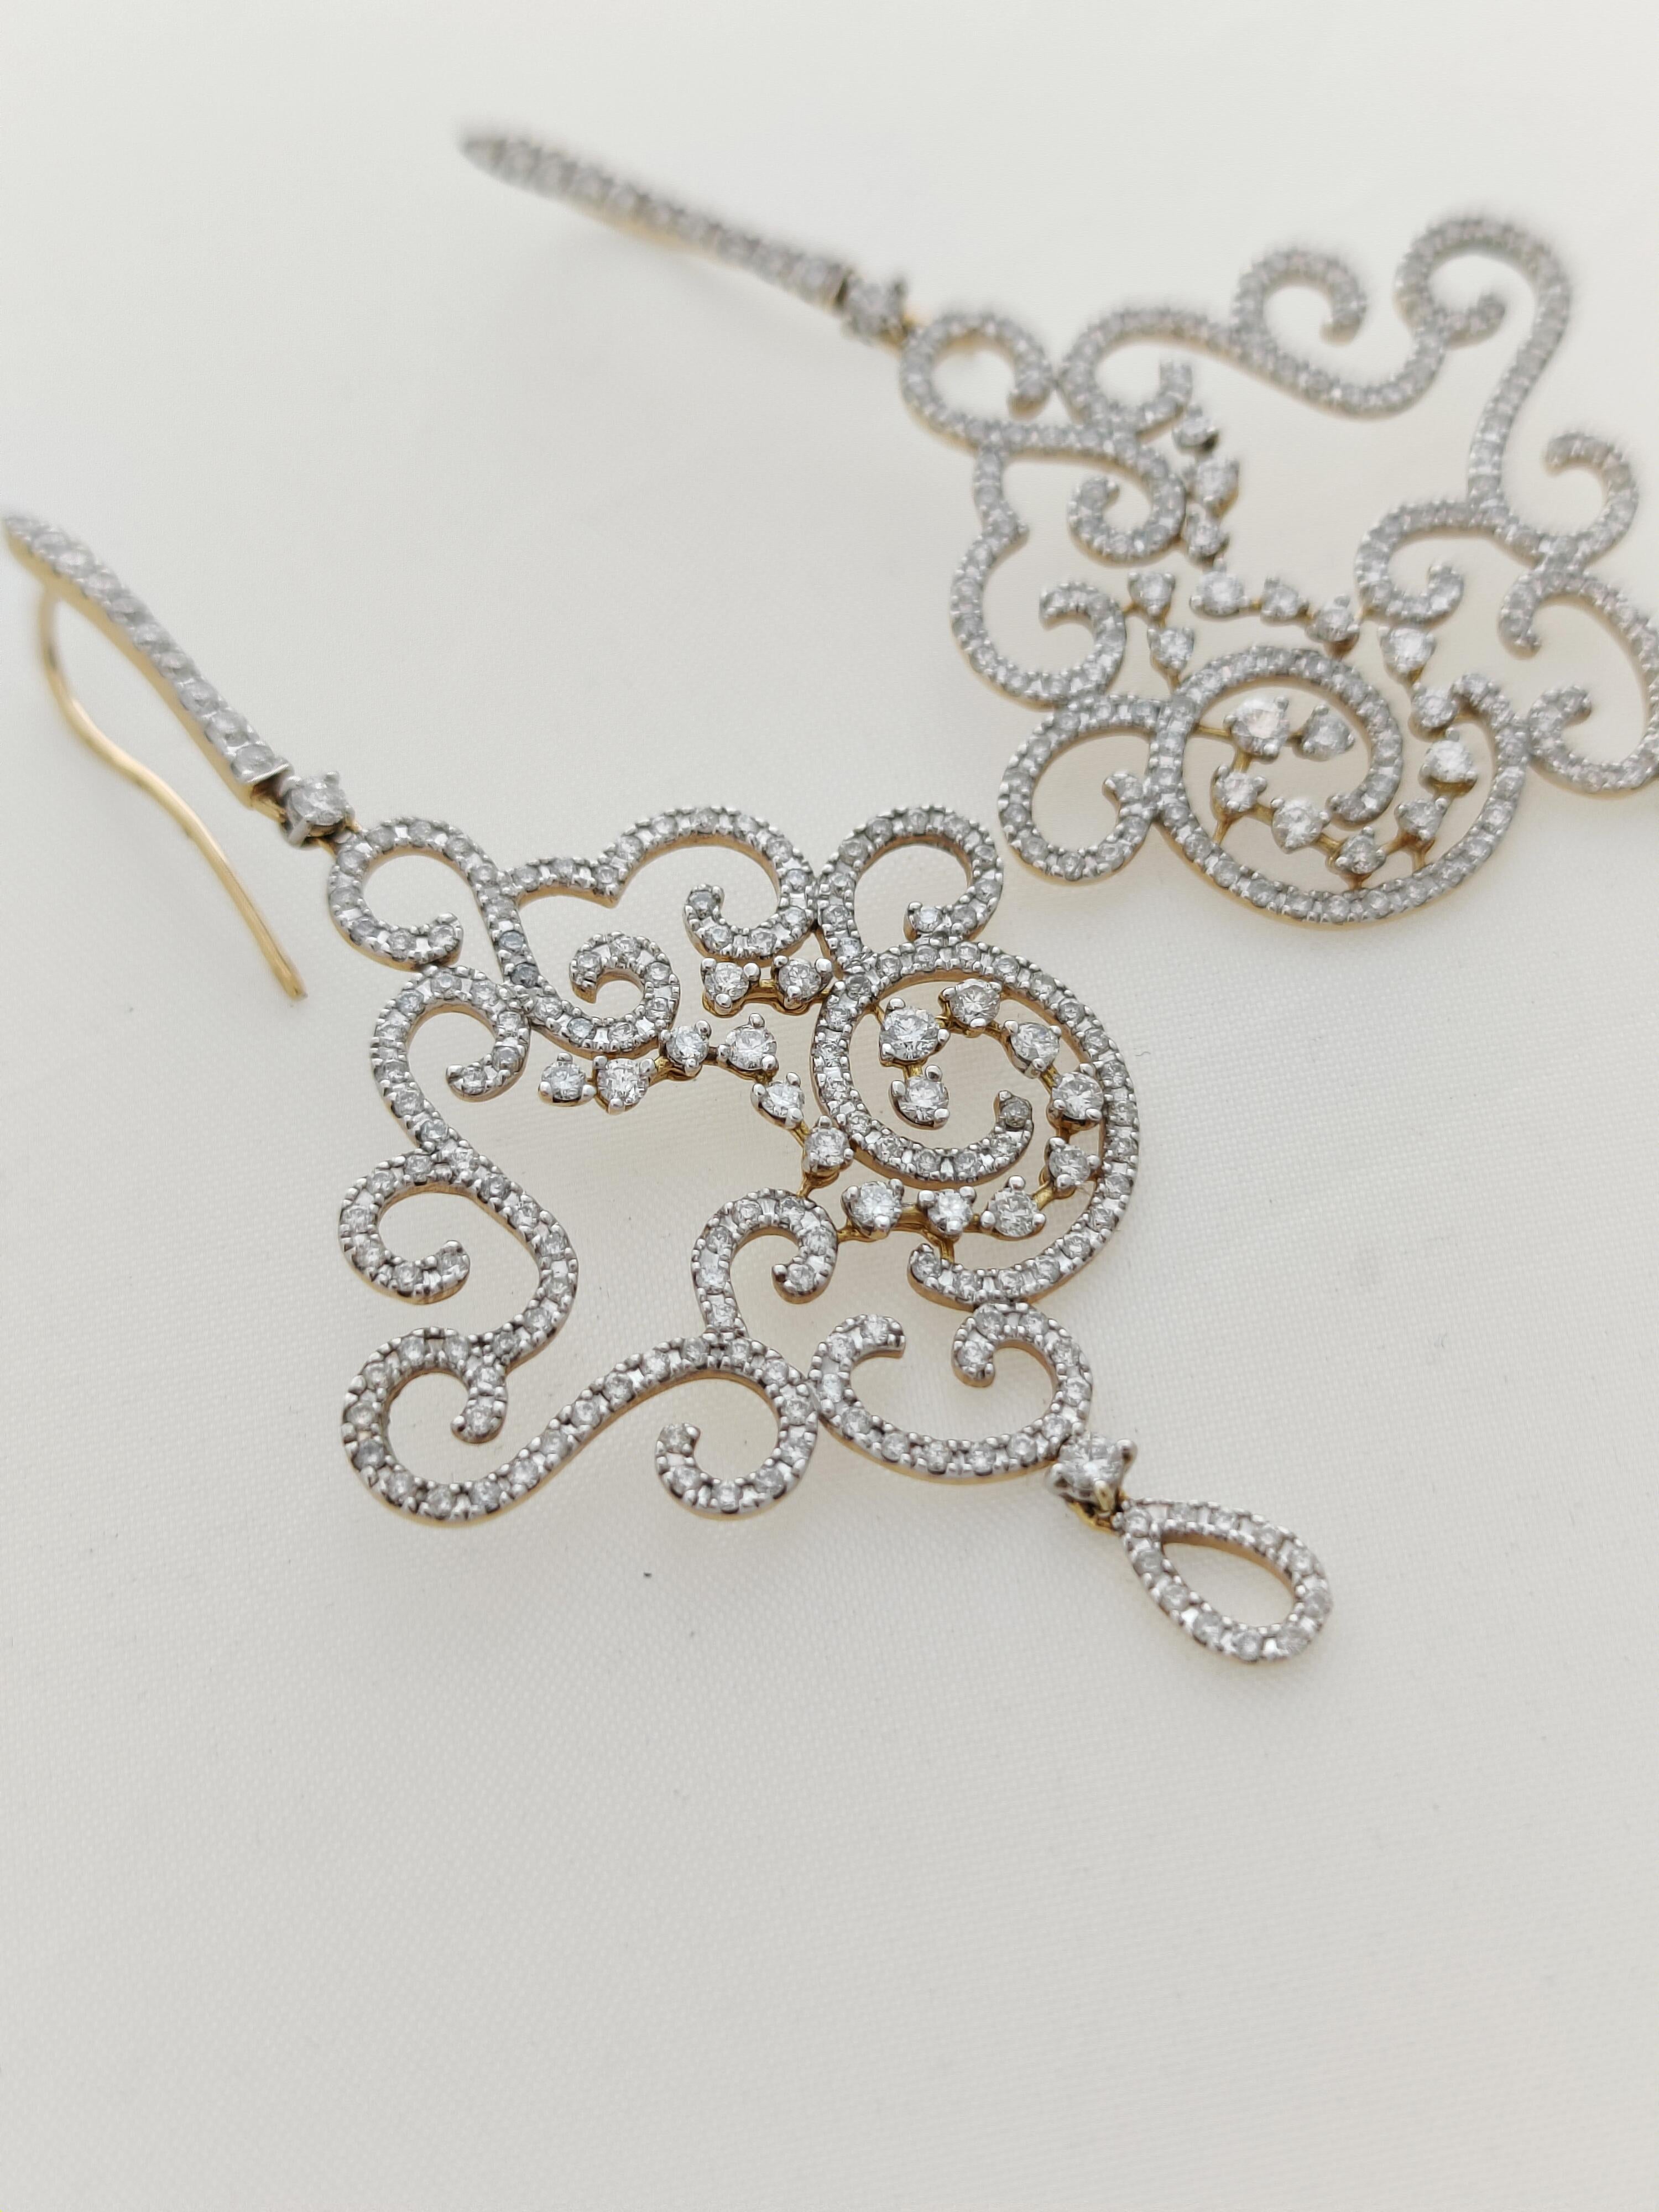 Contemporary Casato Gioielli 18 Karat Gold Lace Earrings Set with Diamonds For Sale